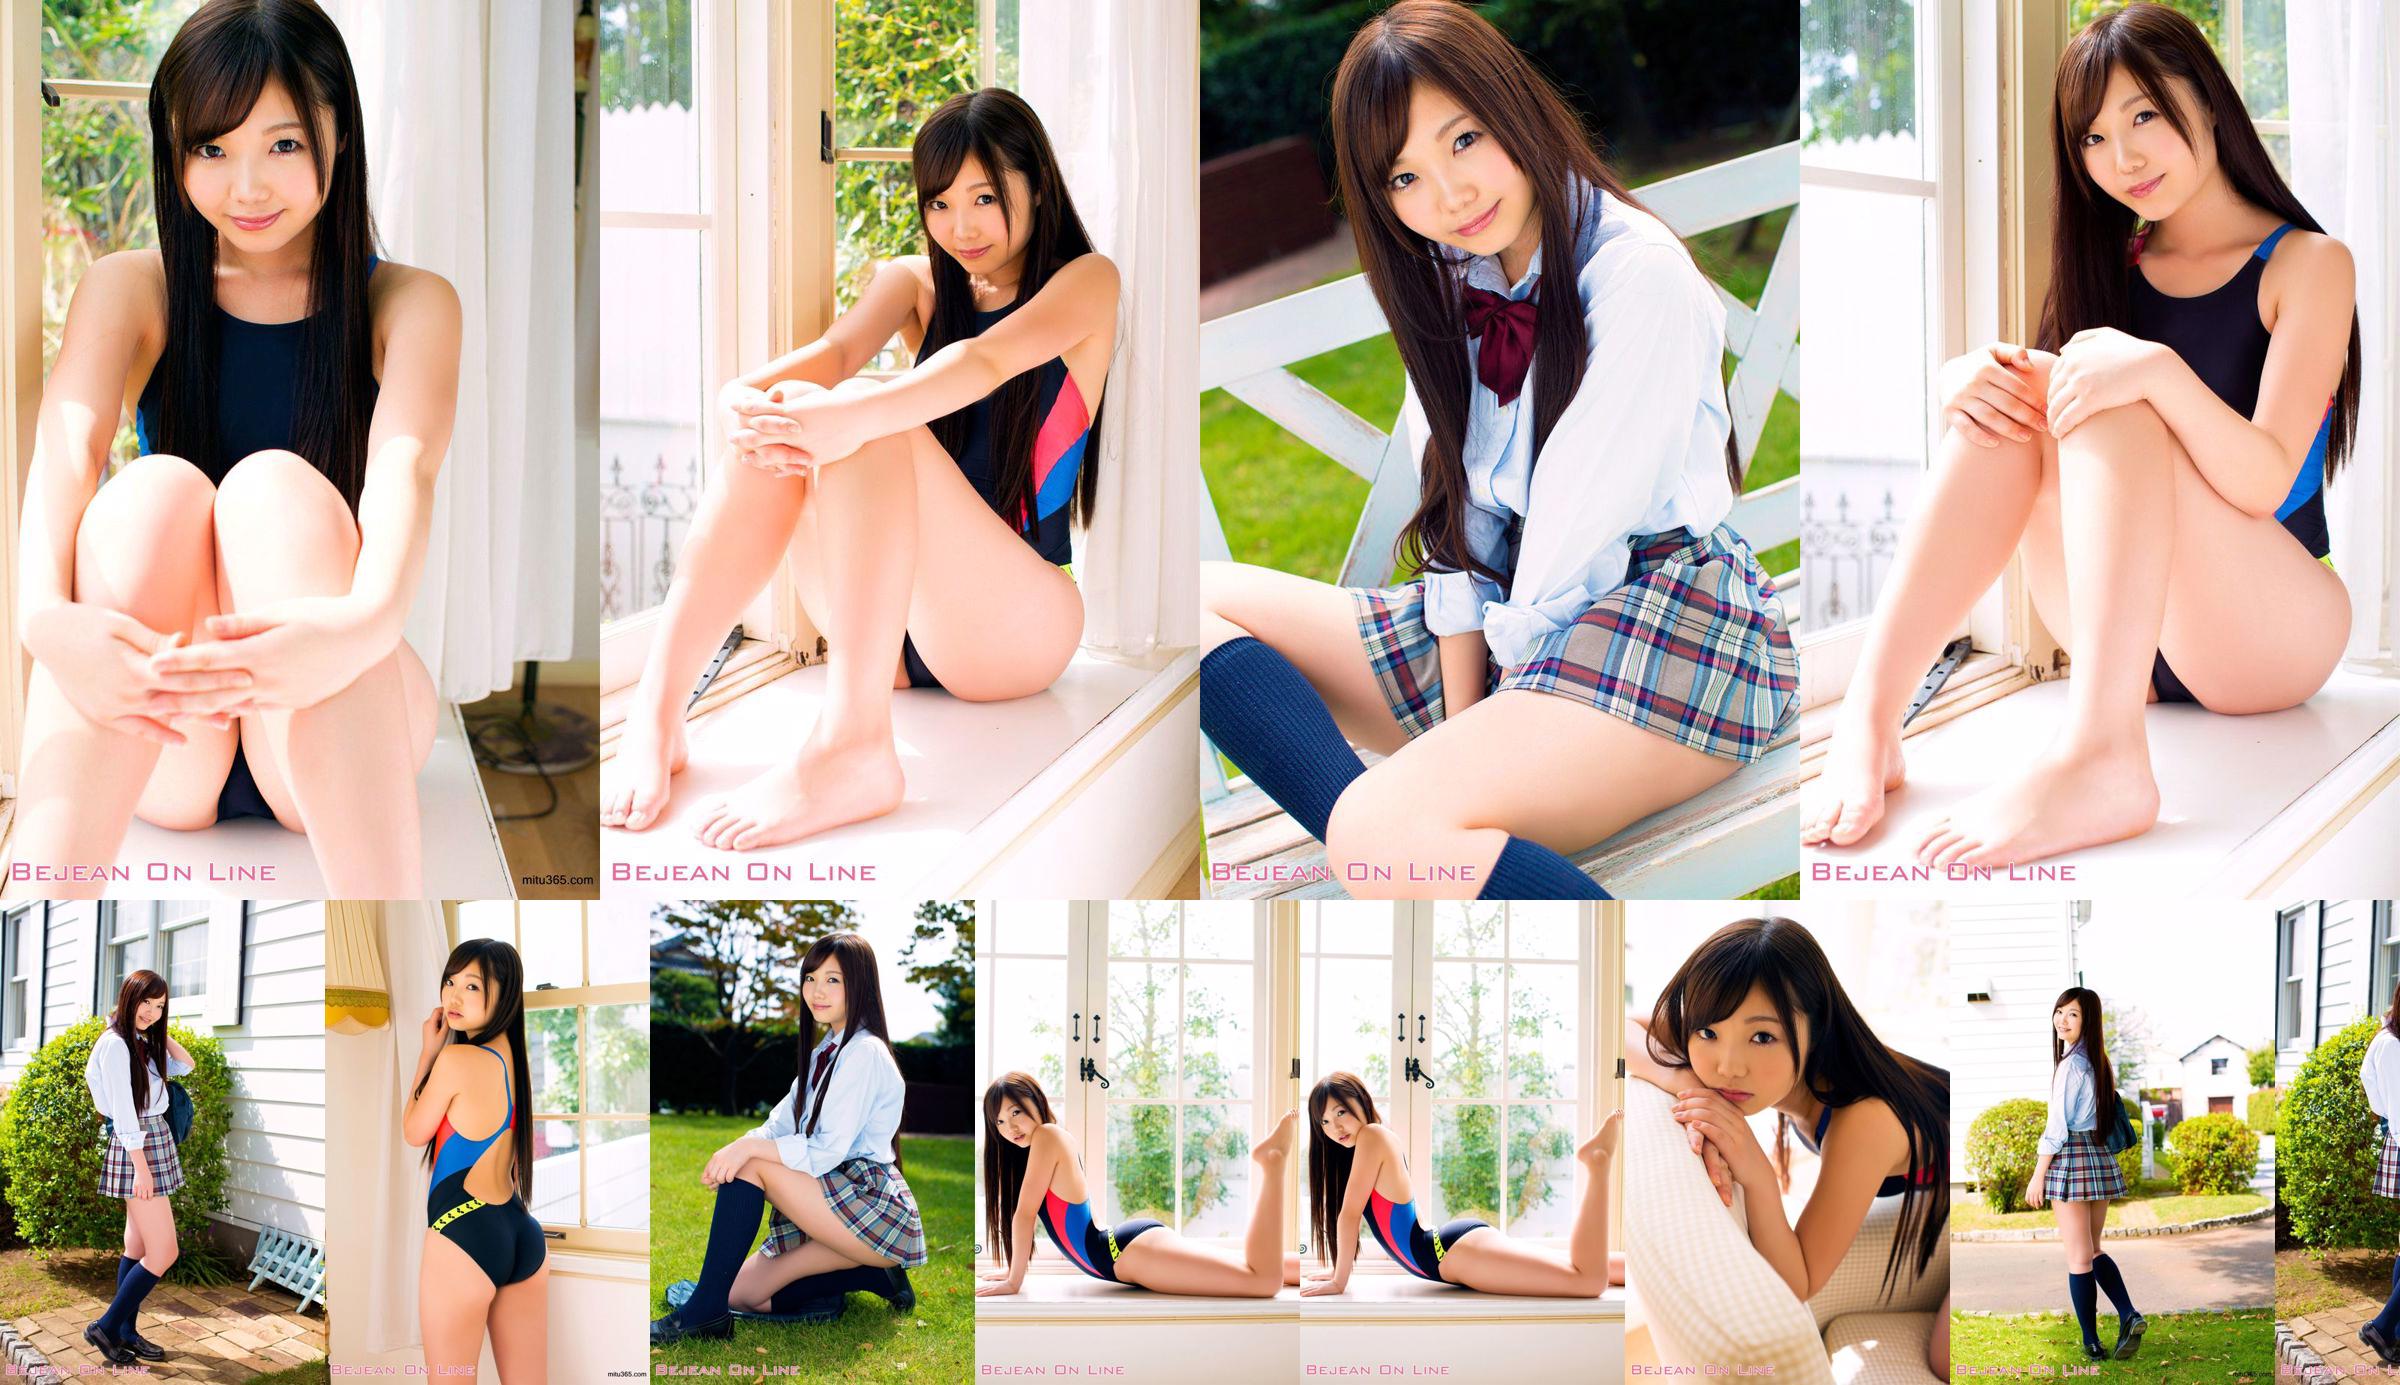 Rie Matsuoka Matsuoka Riei [Bejean Online] Private Bejean Girls 'School No.4eb787 Seite 1